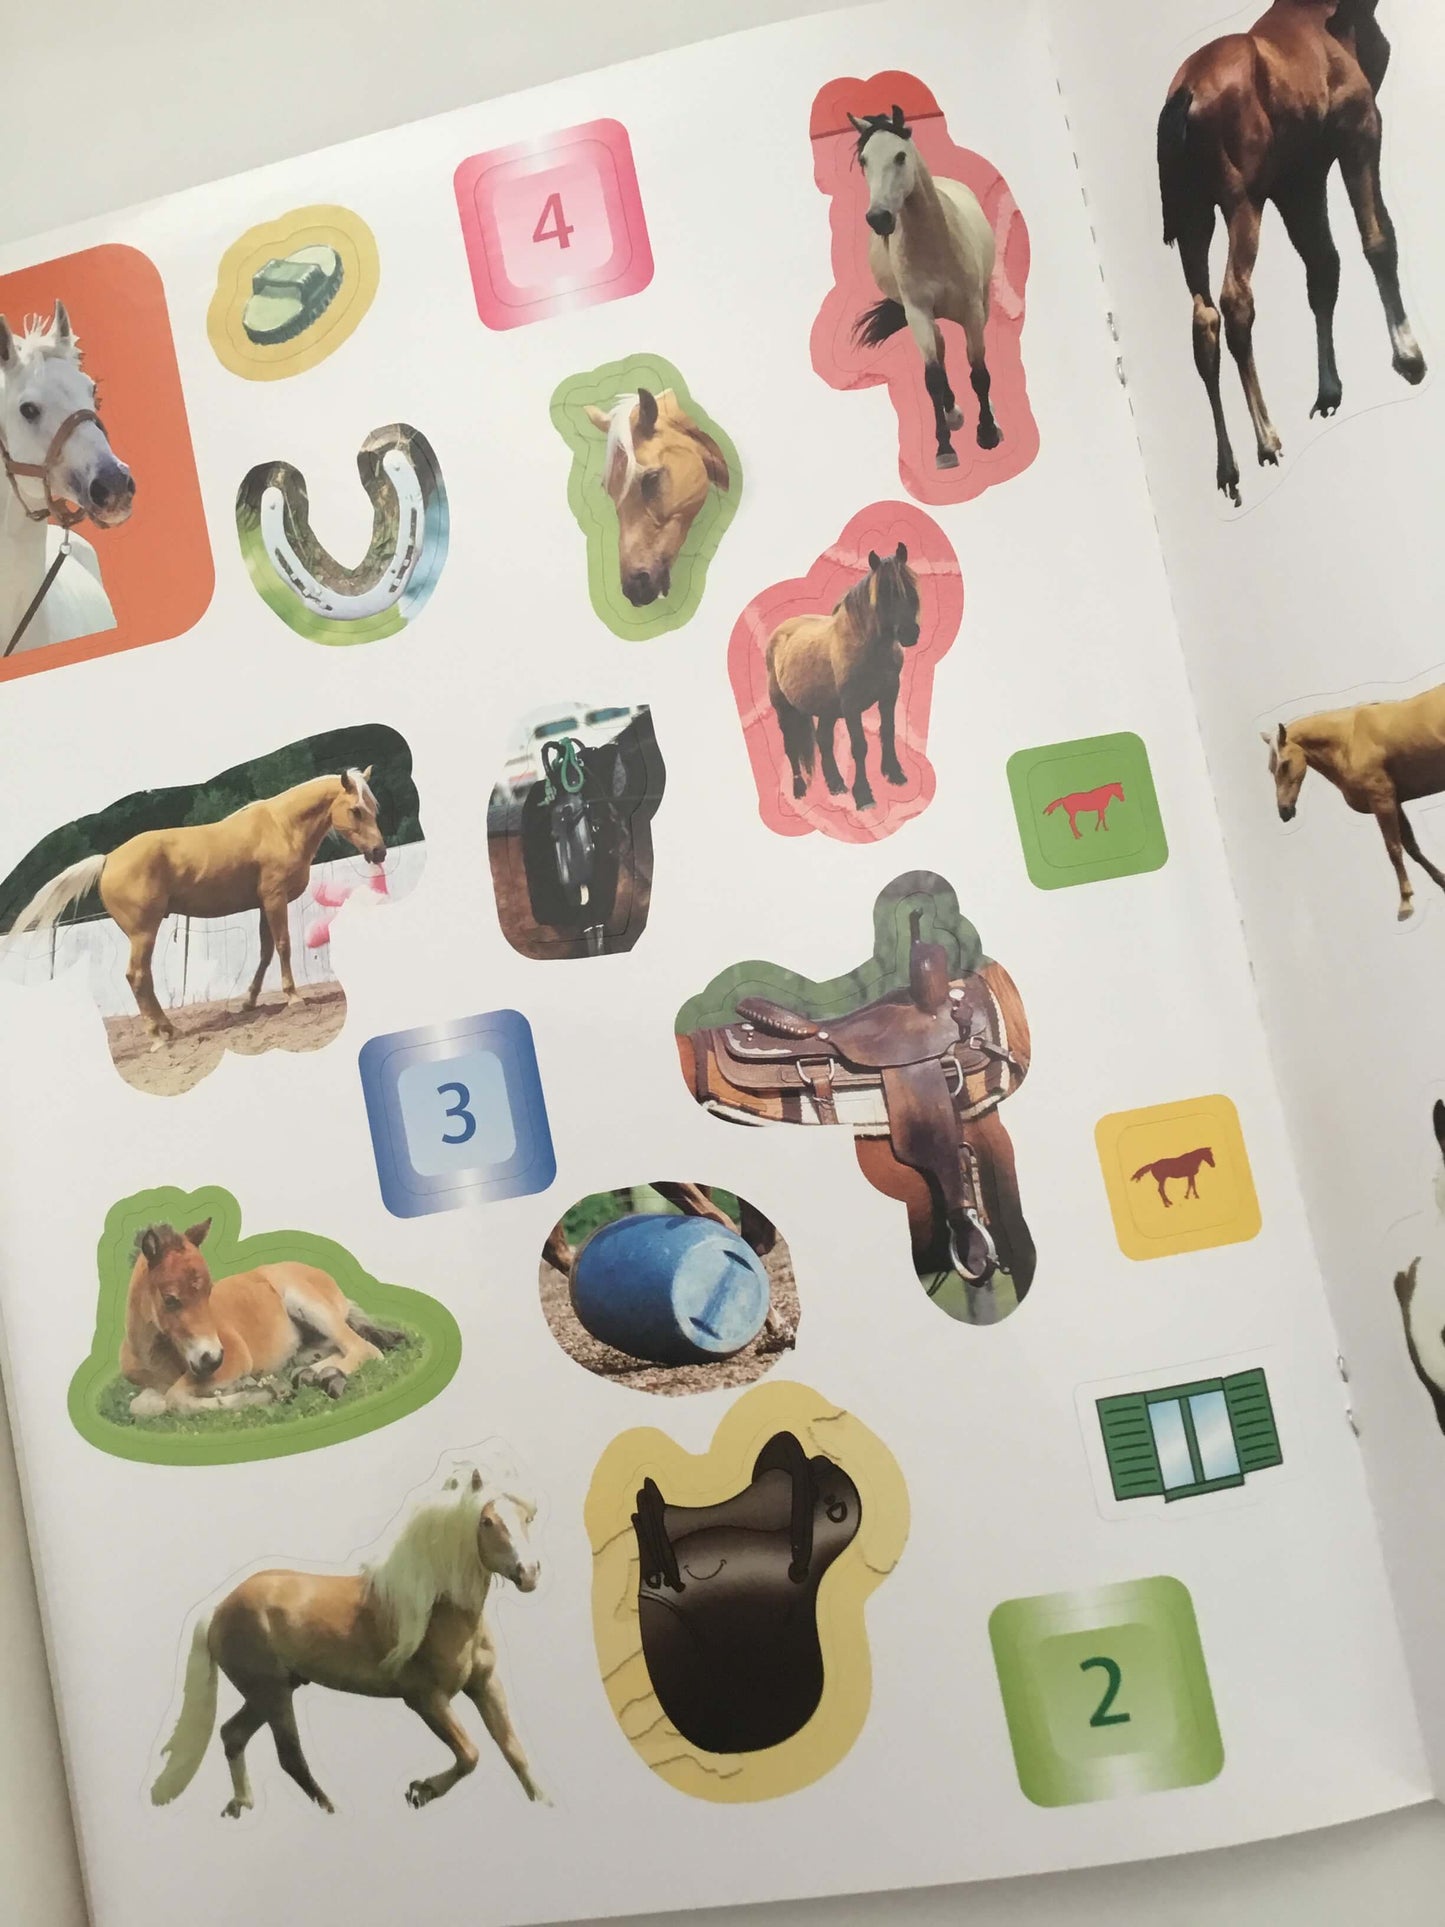 Sticker Book of Horses